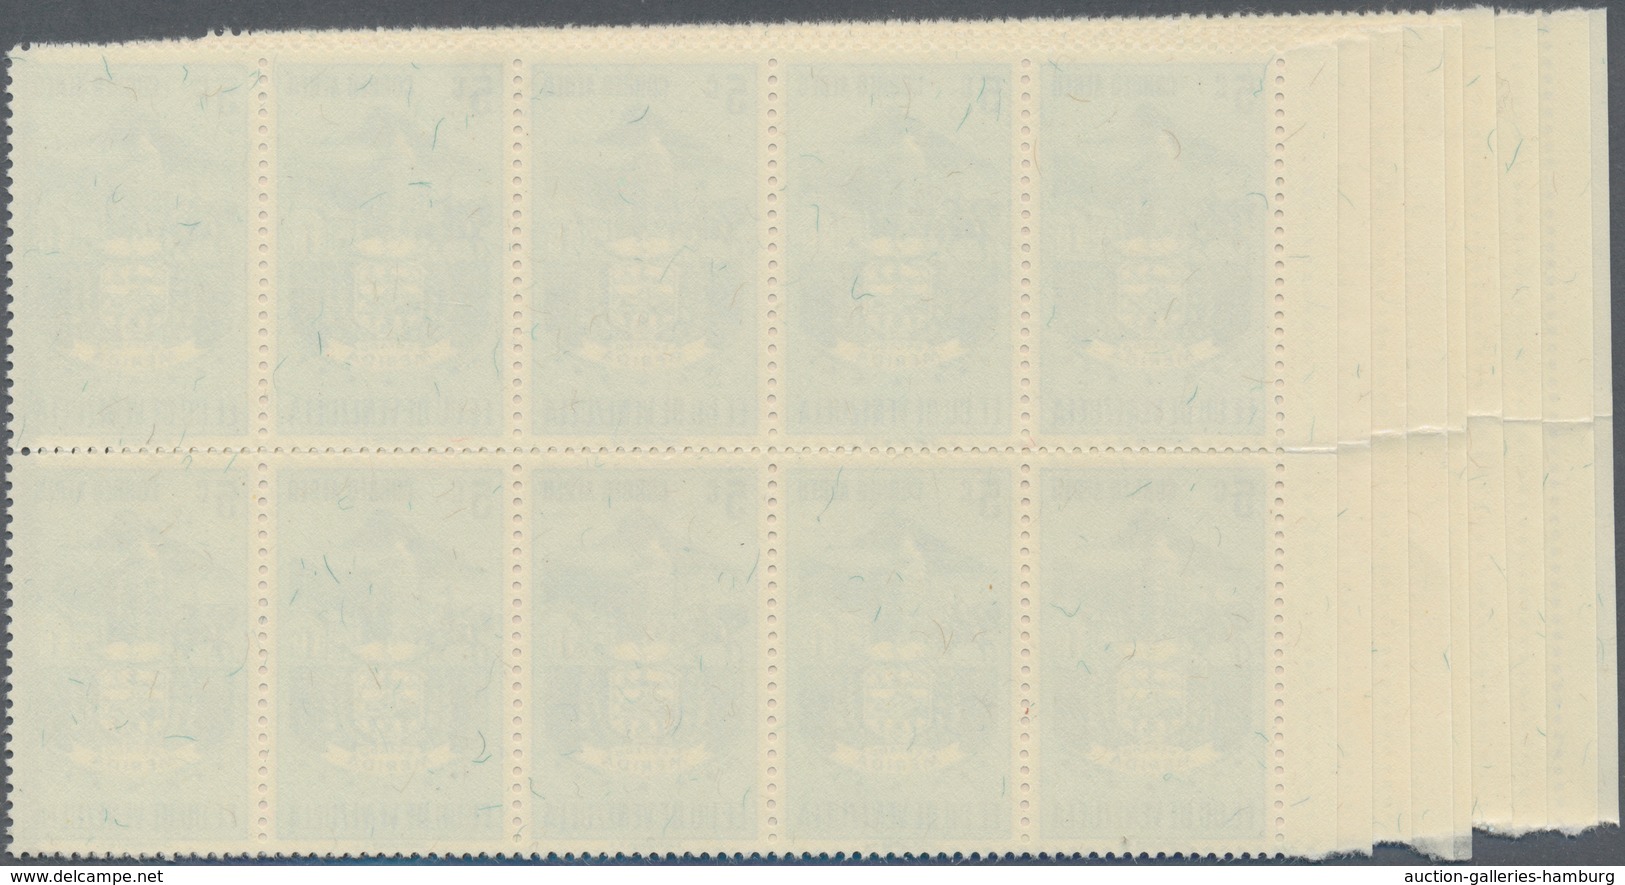 Venezuela: 1953, Coat Of Arms 'MERIDA' Airmail Stamps Complete Set Of Nine In Blocks Of Ten From Lef - Venezuela